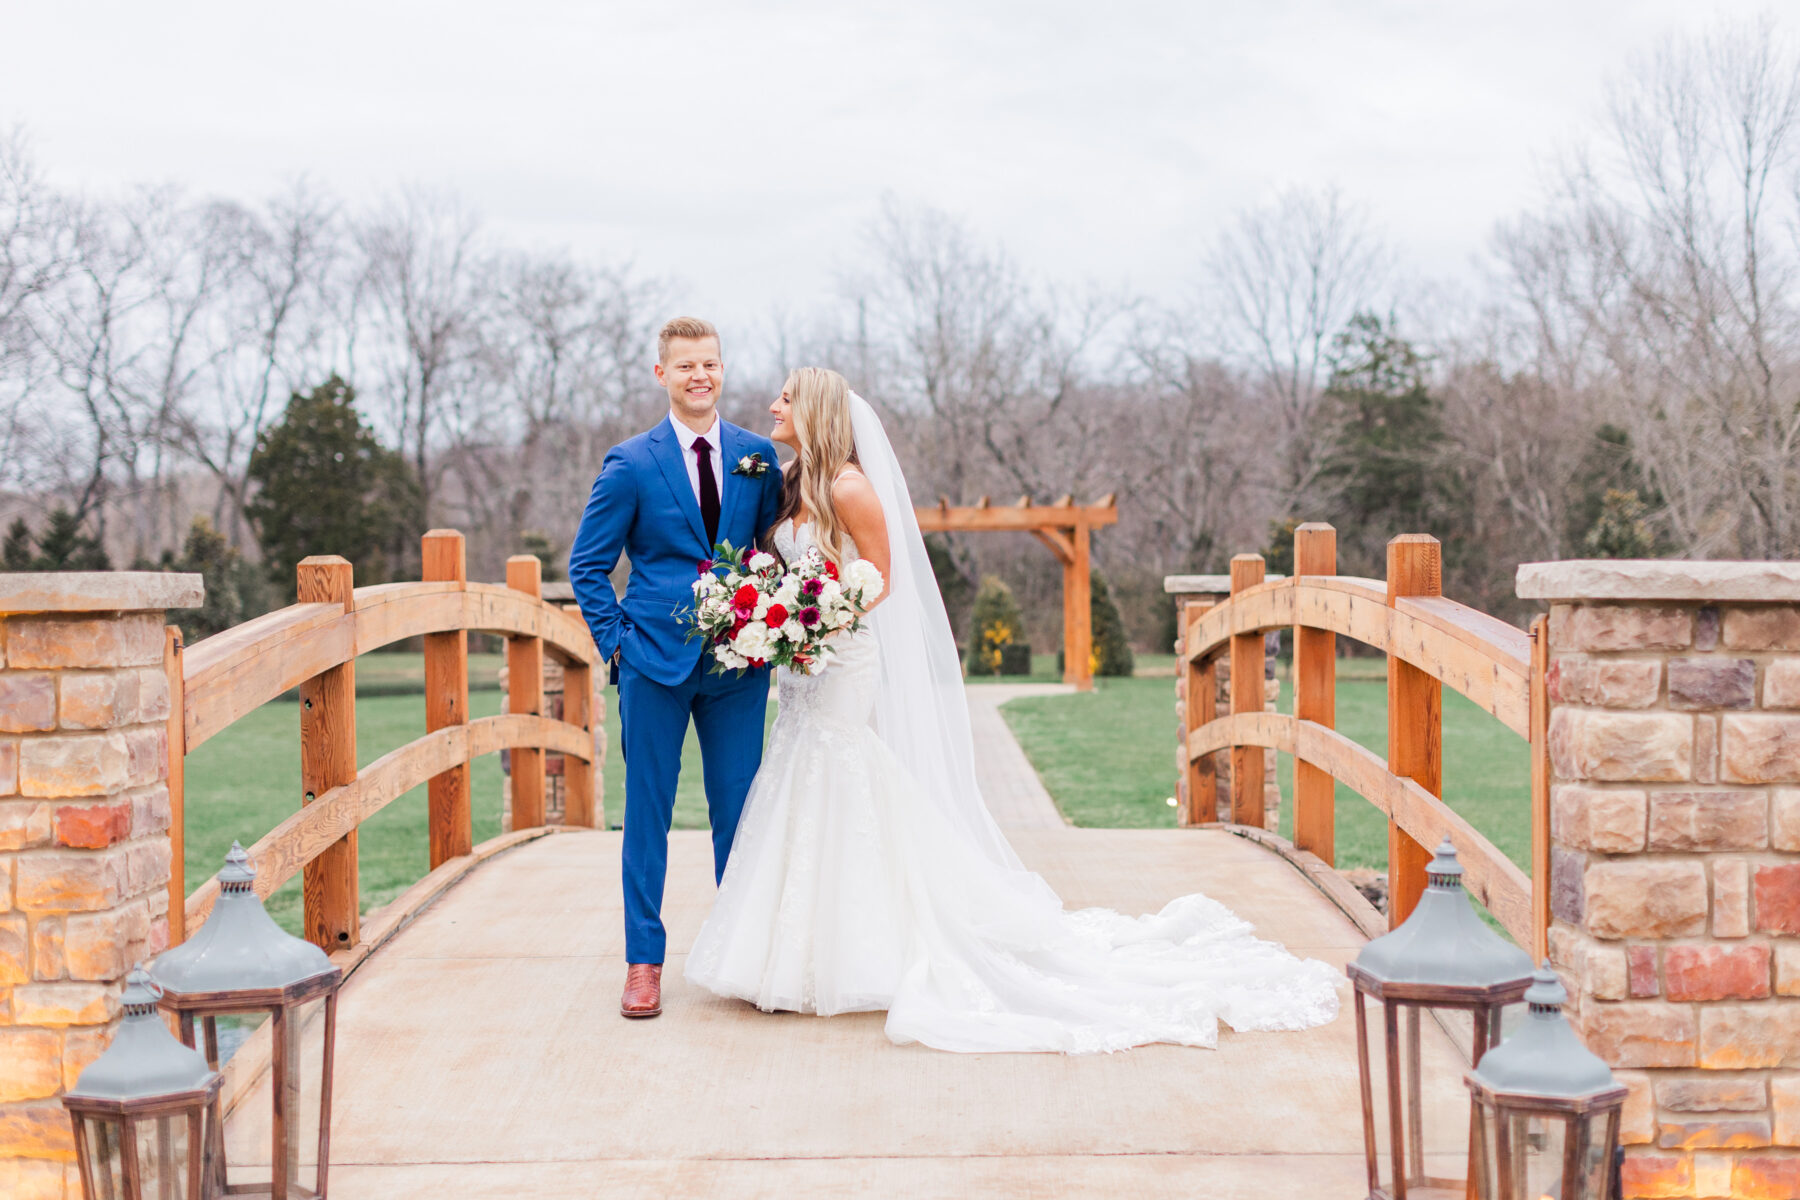 Sycamore Farms Winter Wedding | Nashville Bride Guide